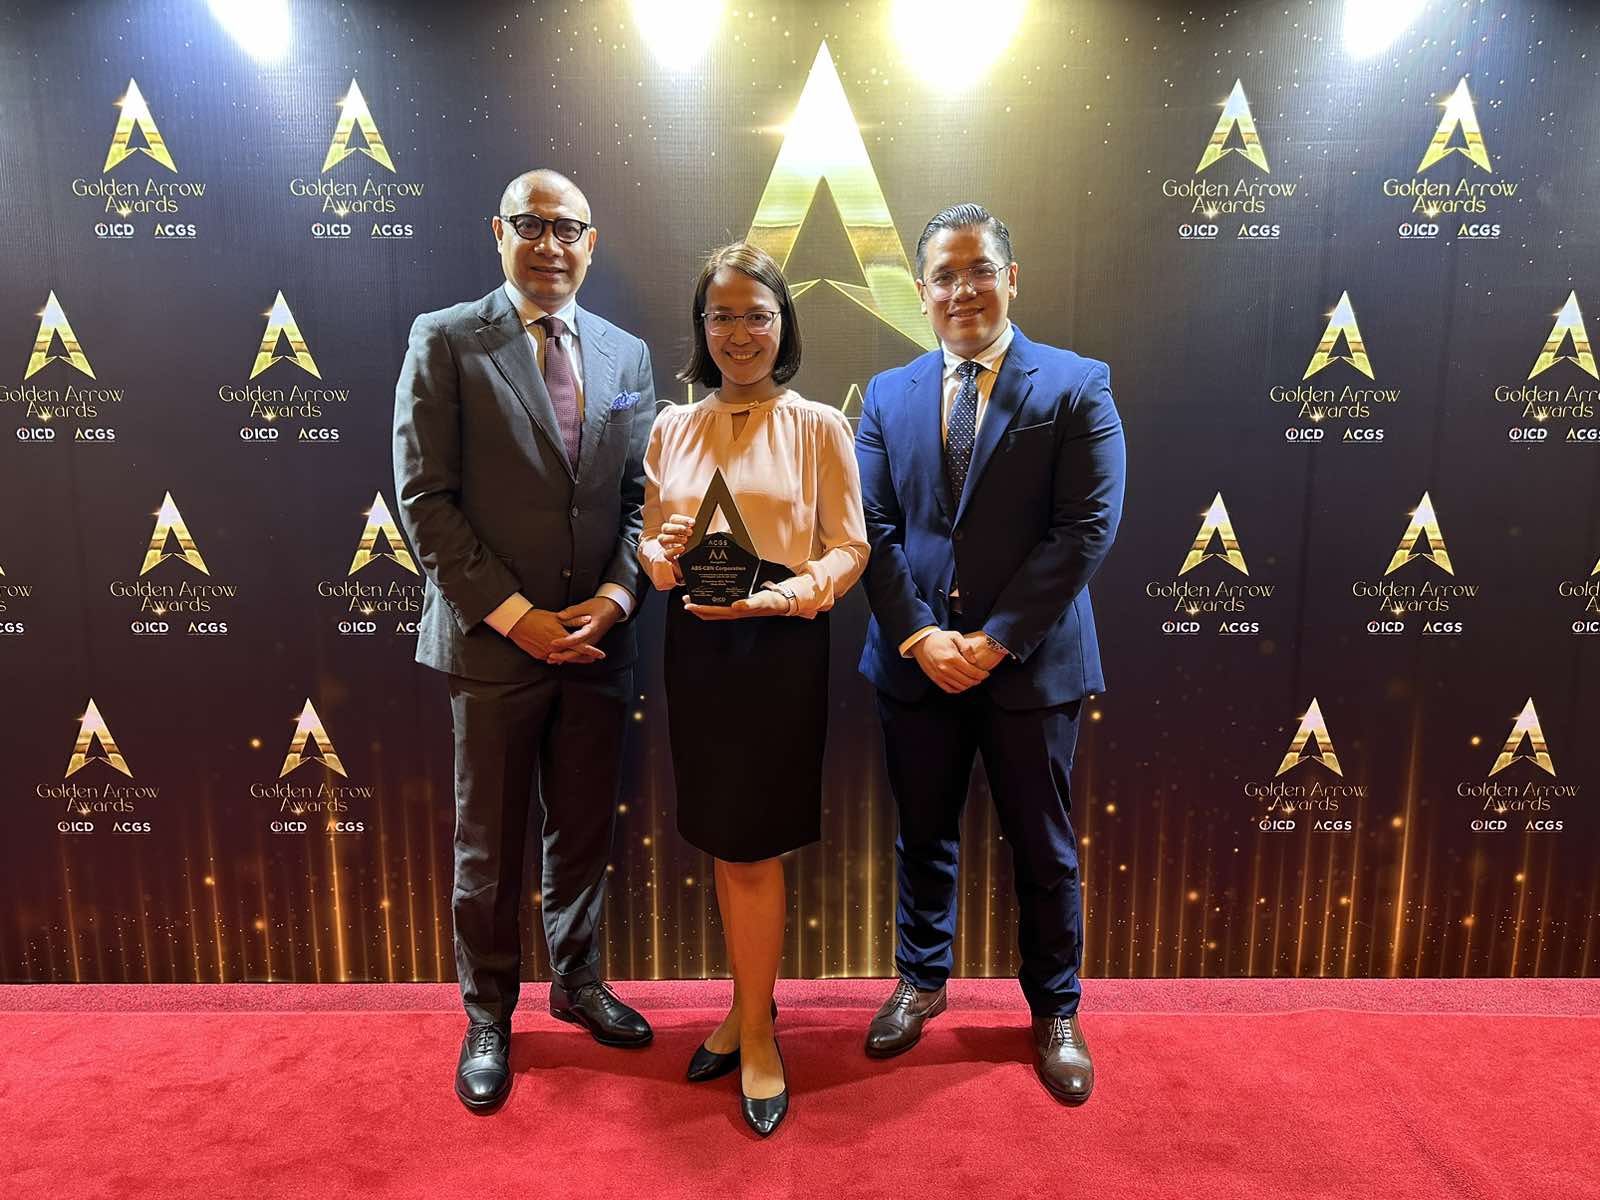 ABS-CBN receives ACGS Golden Arrow Award for Good Corporate Governance